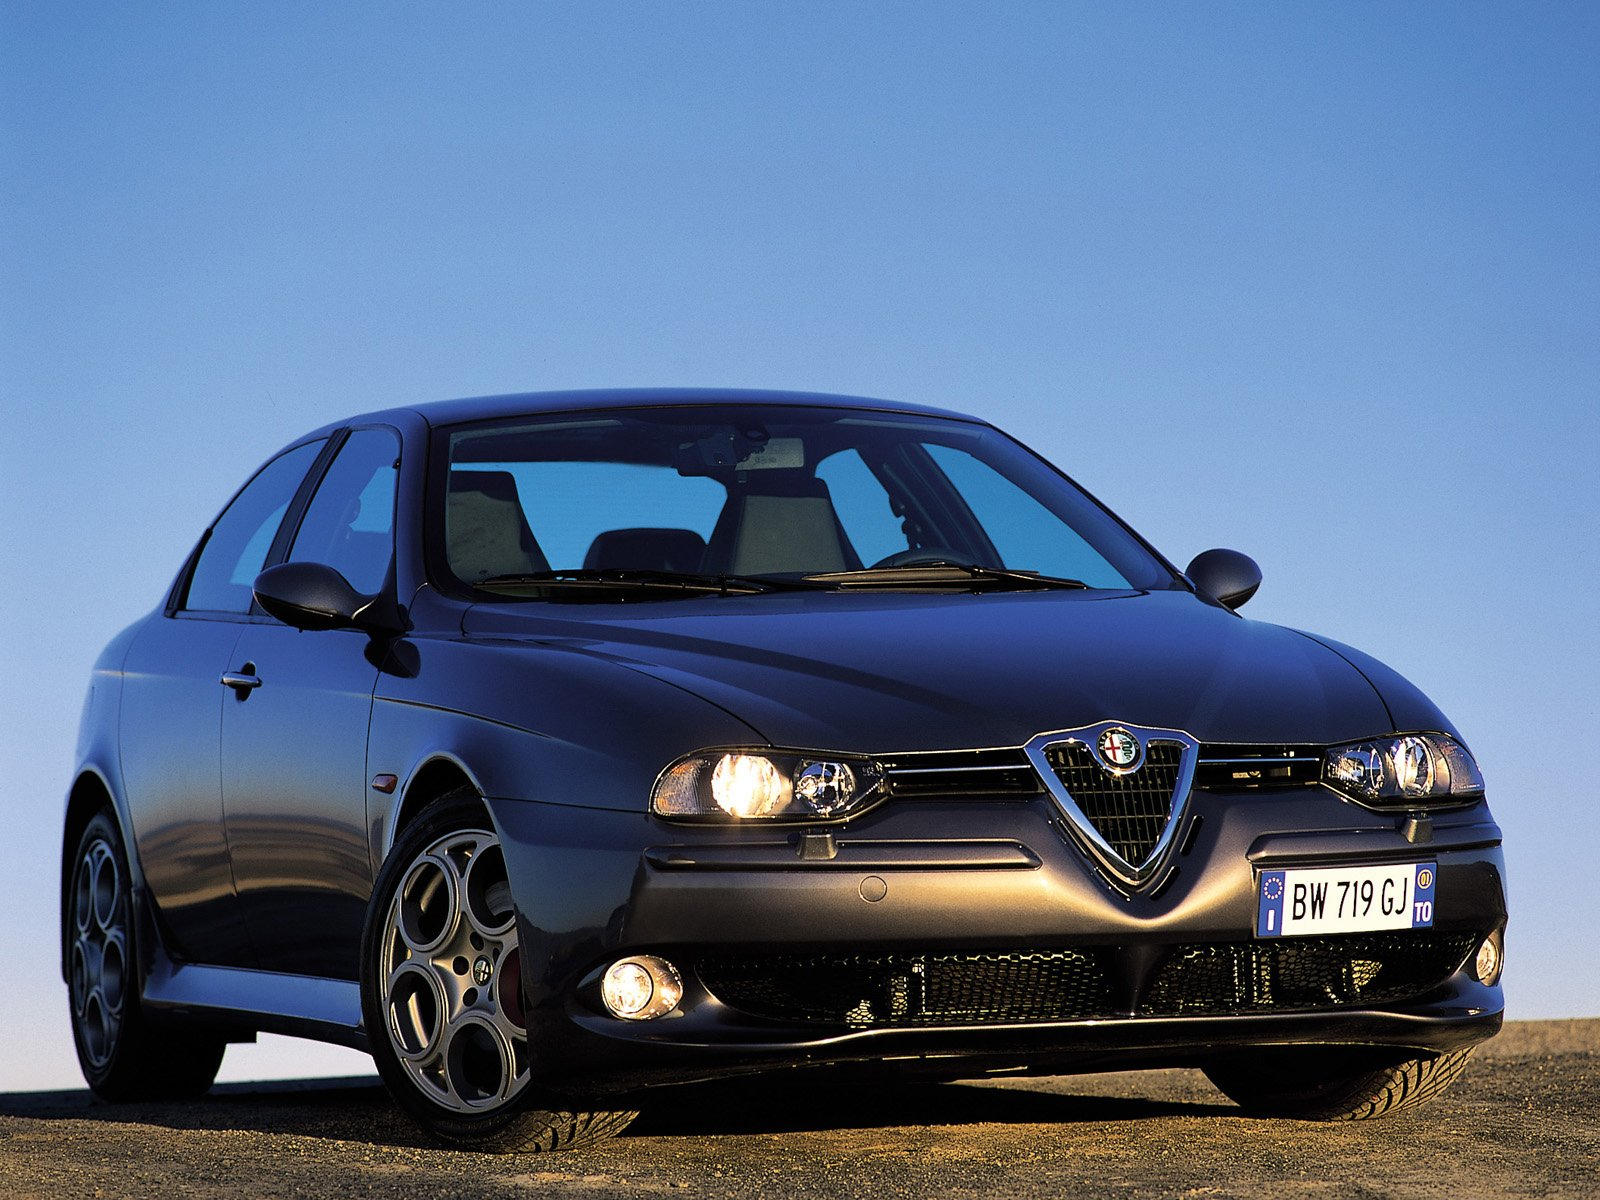 Alfa-Romeo 156  2.5 i V6 24V 190 KM - dane techniczne, wymiary, spalanie i opinie